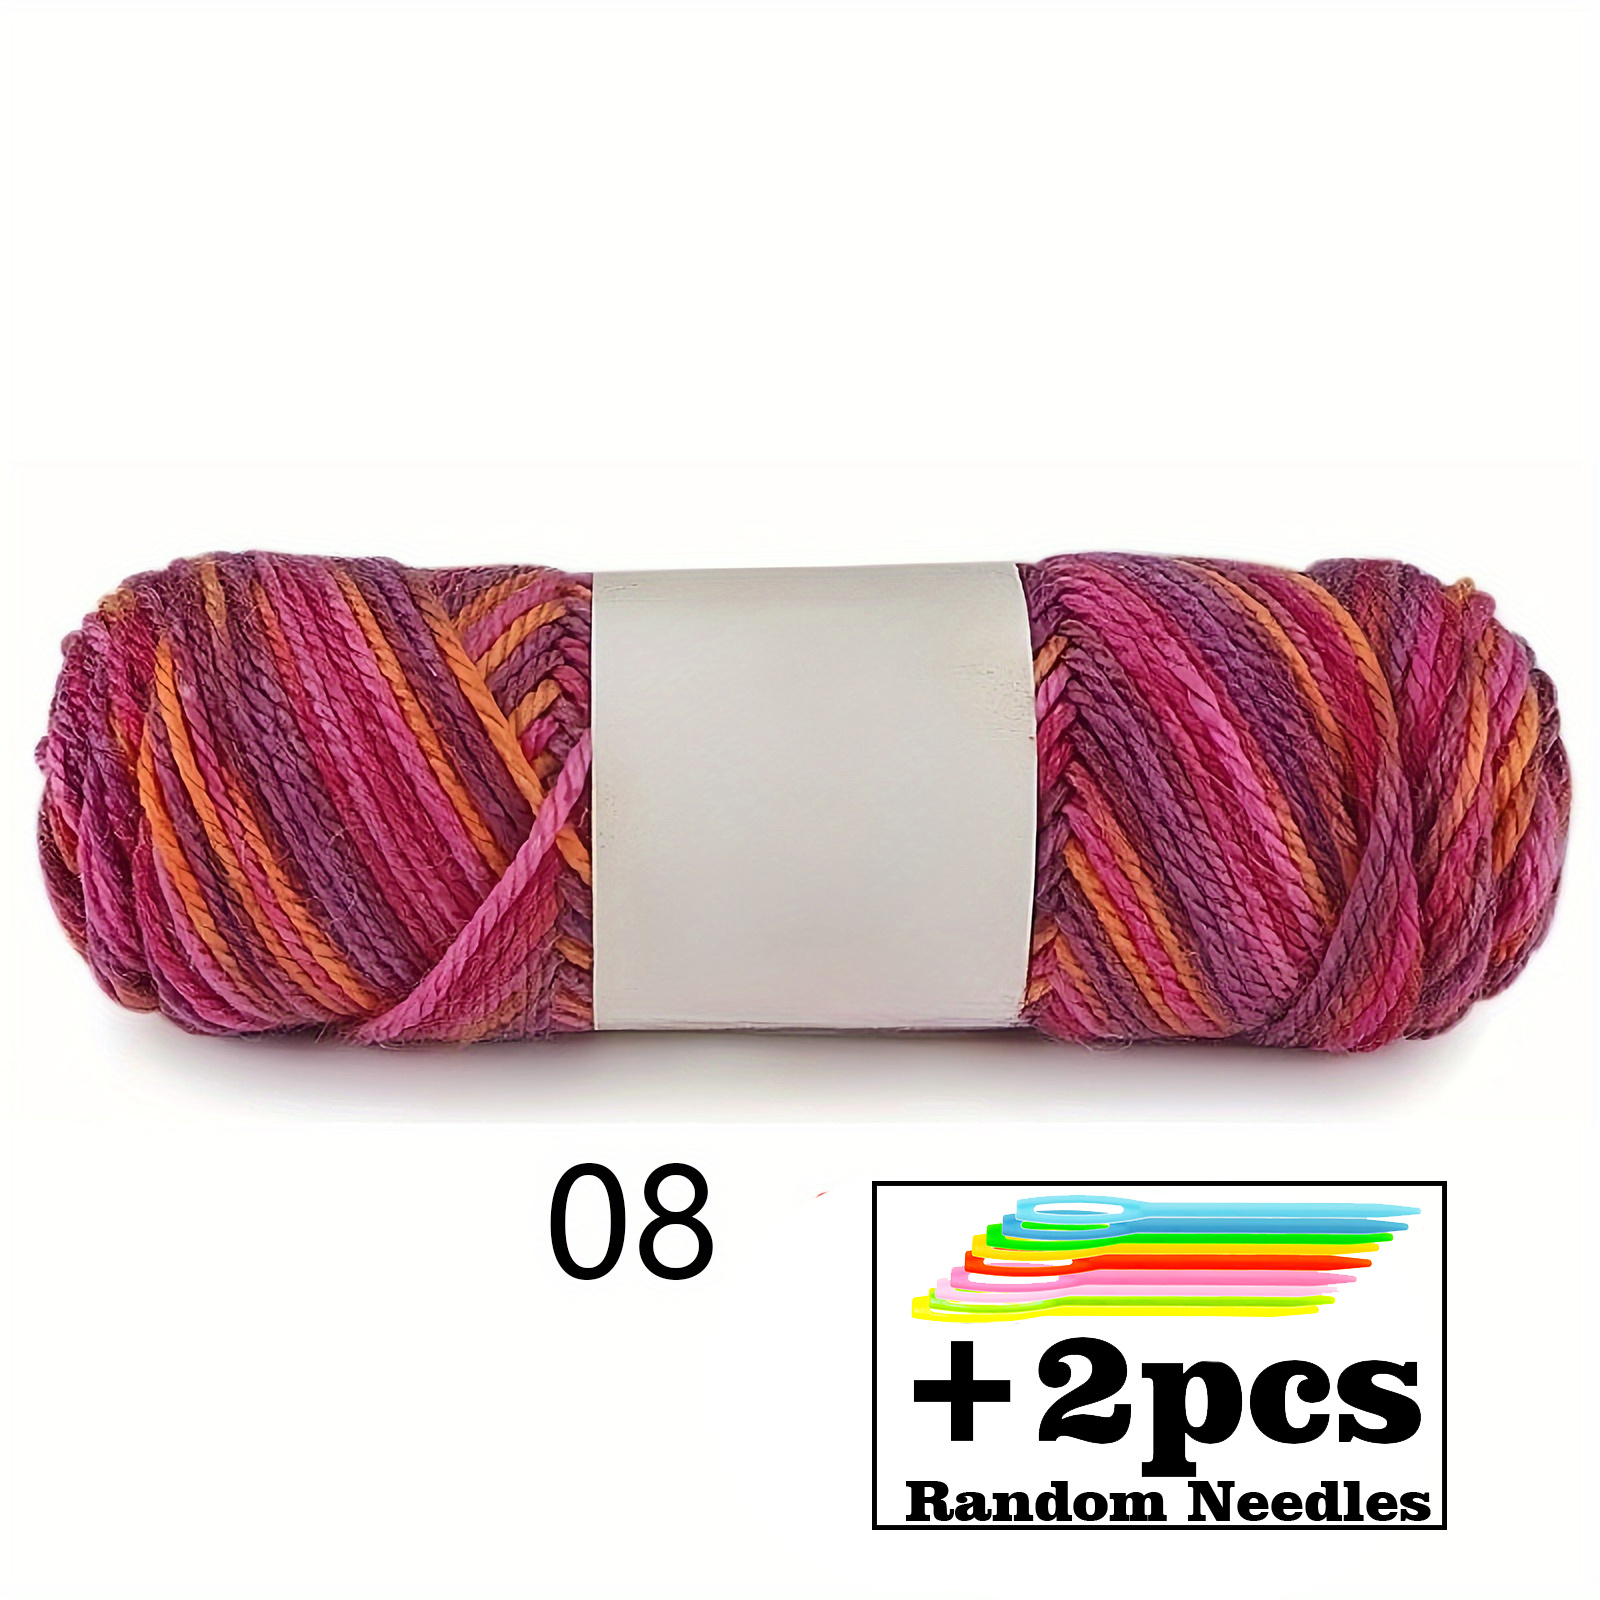 Needles acrylic yarn 8 ply - 100g – OZ YARN